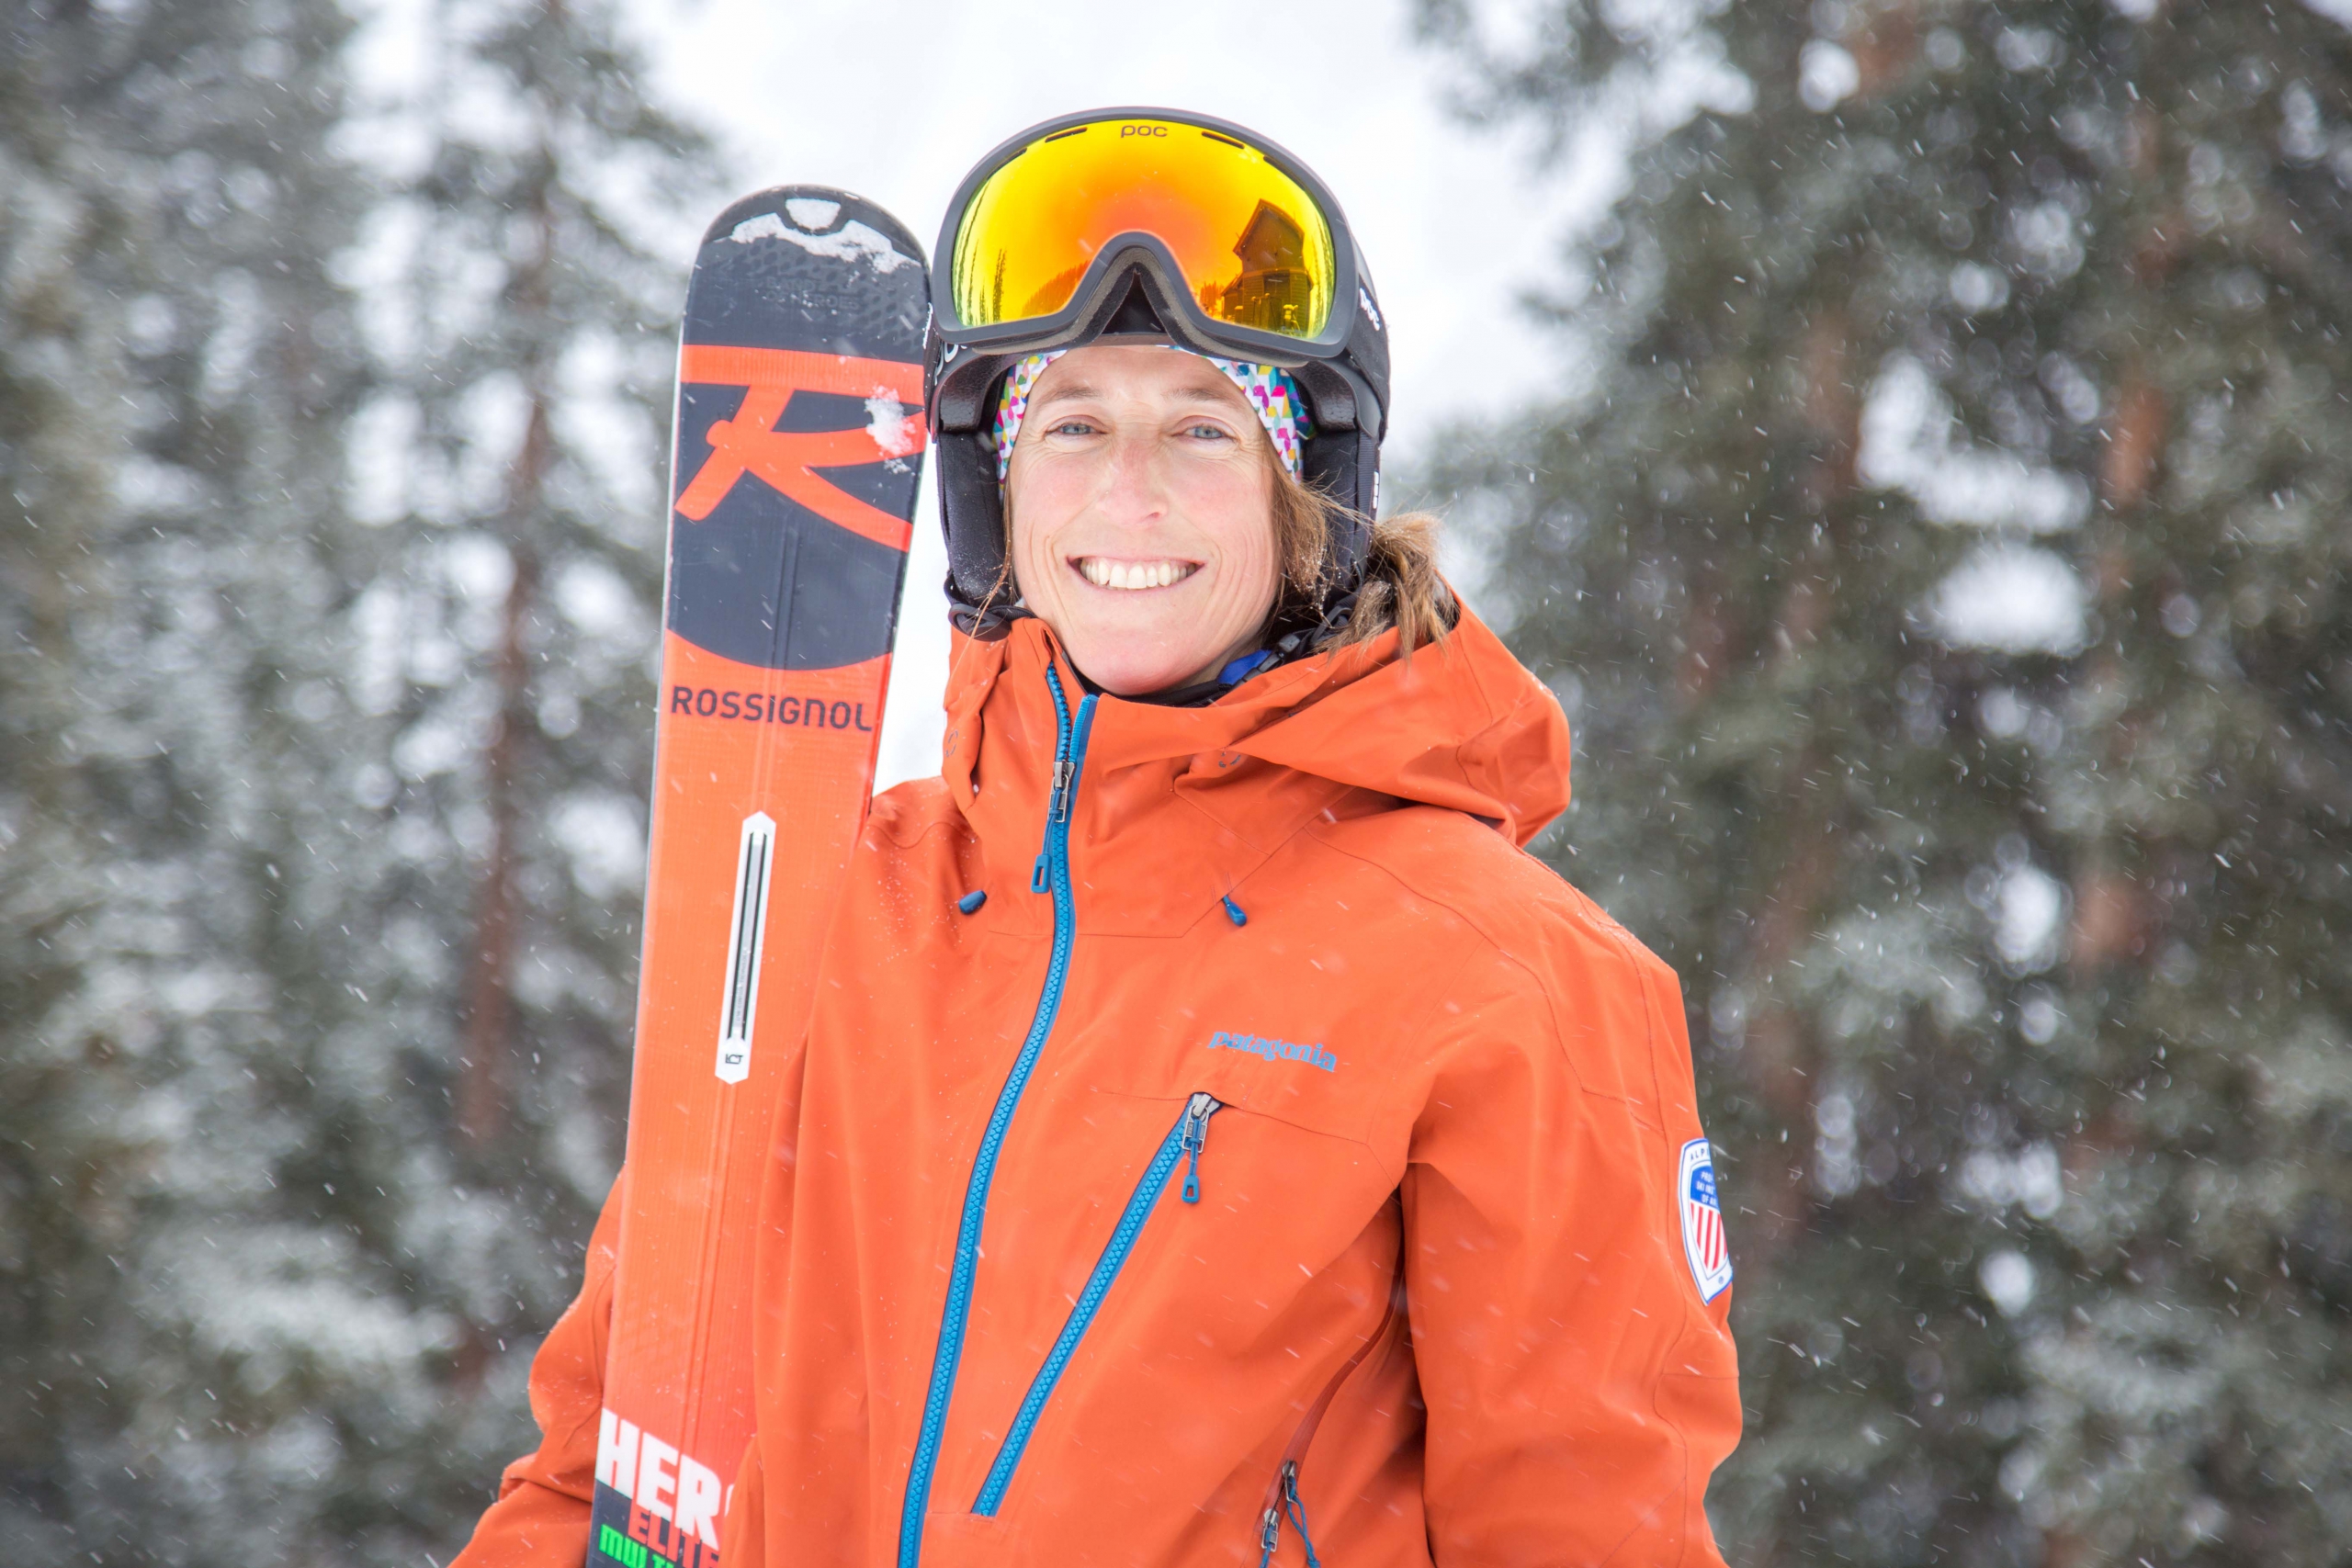 PSIA Alpine Team Member Ann Schorling